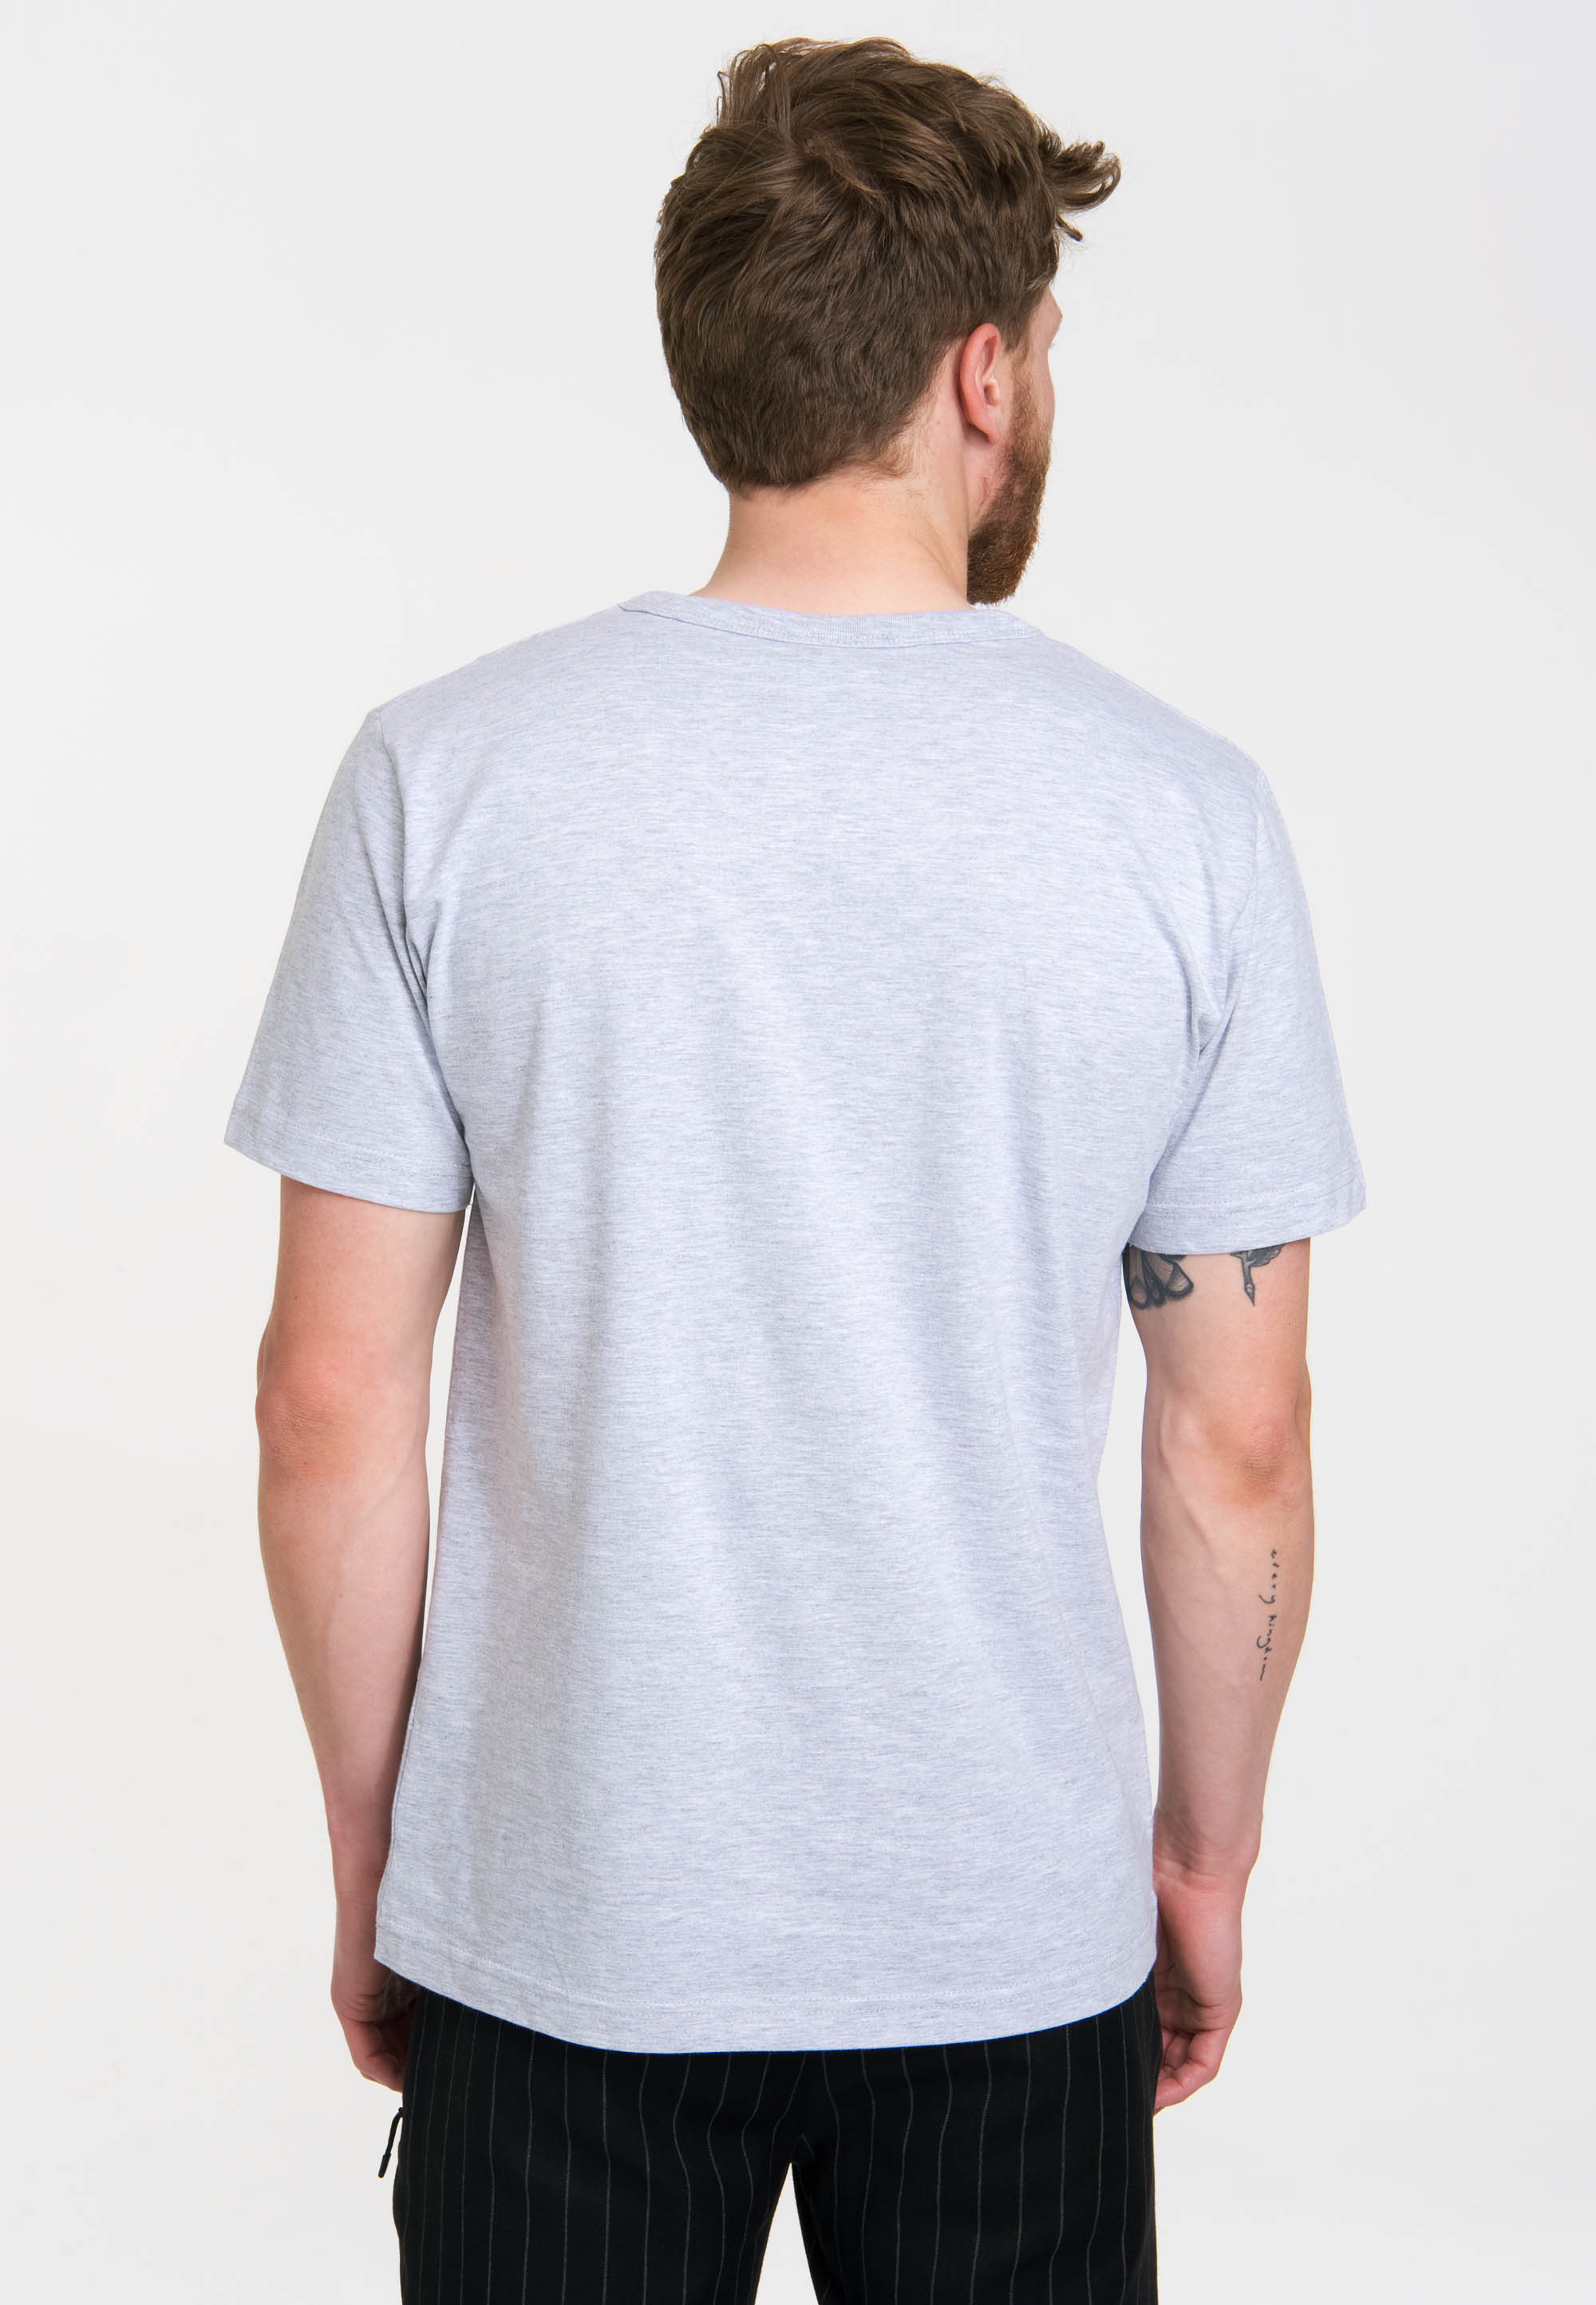 Portrait Gray) T-shirt cotton 100% eBay | Asterix Logoshirt® (Heather